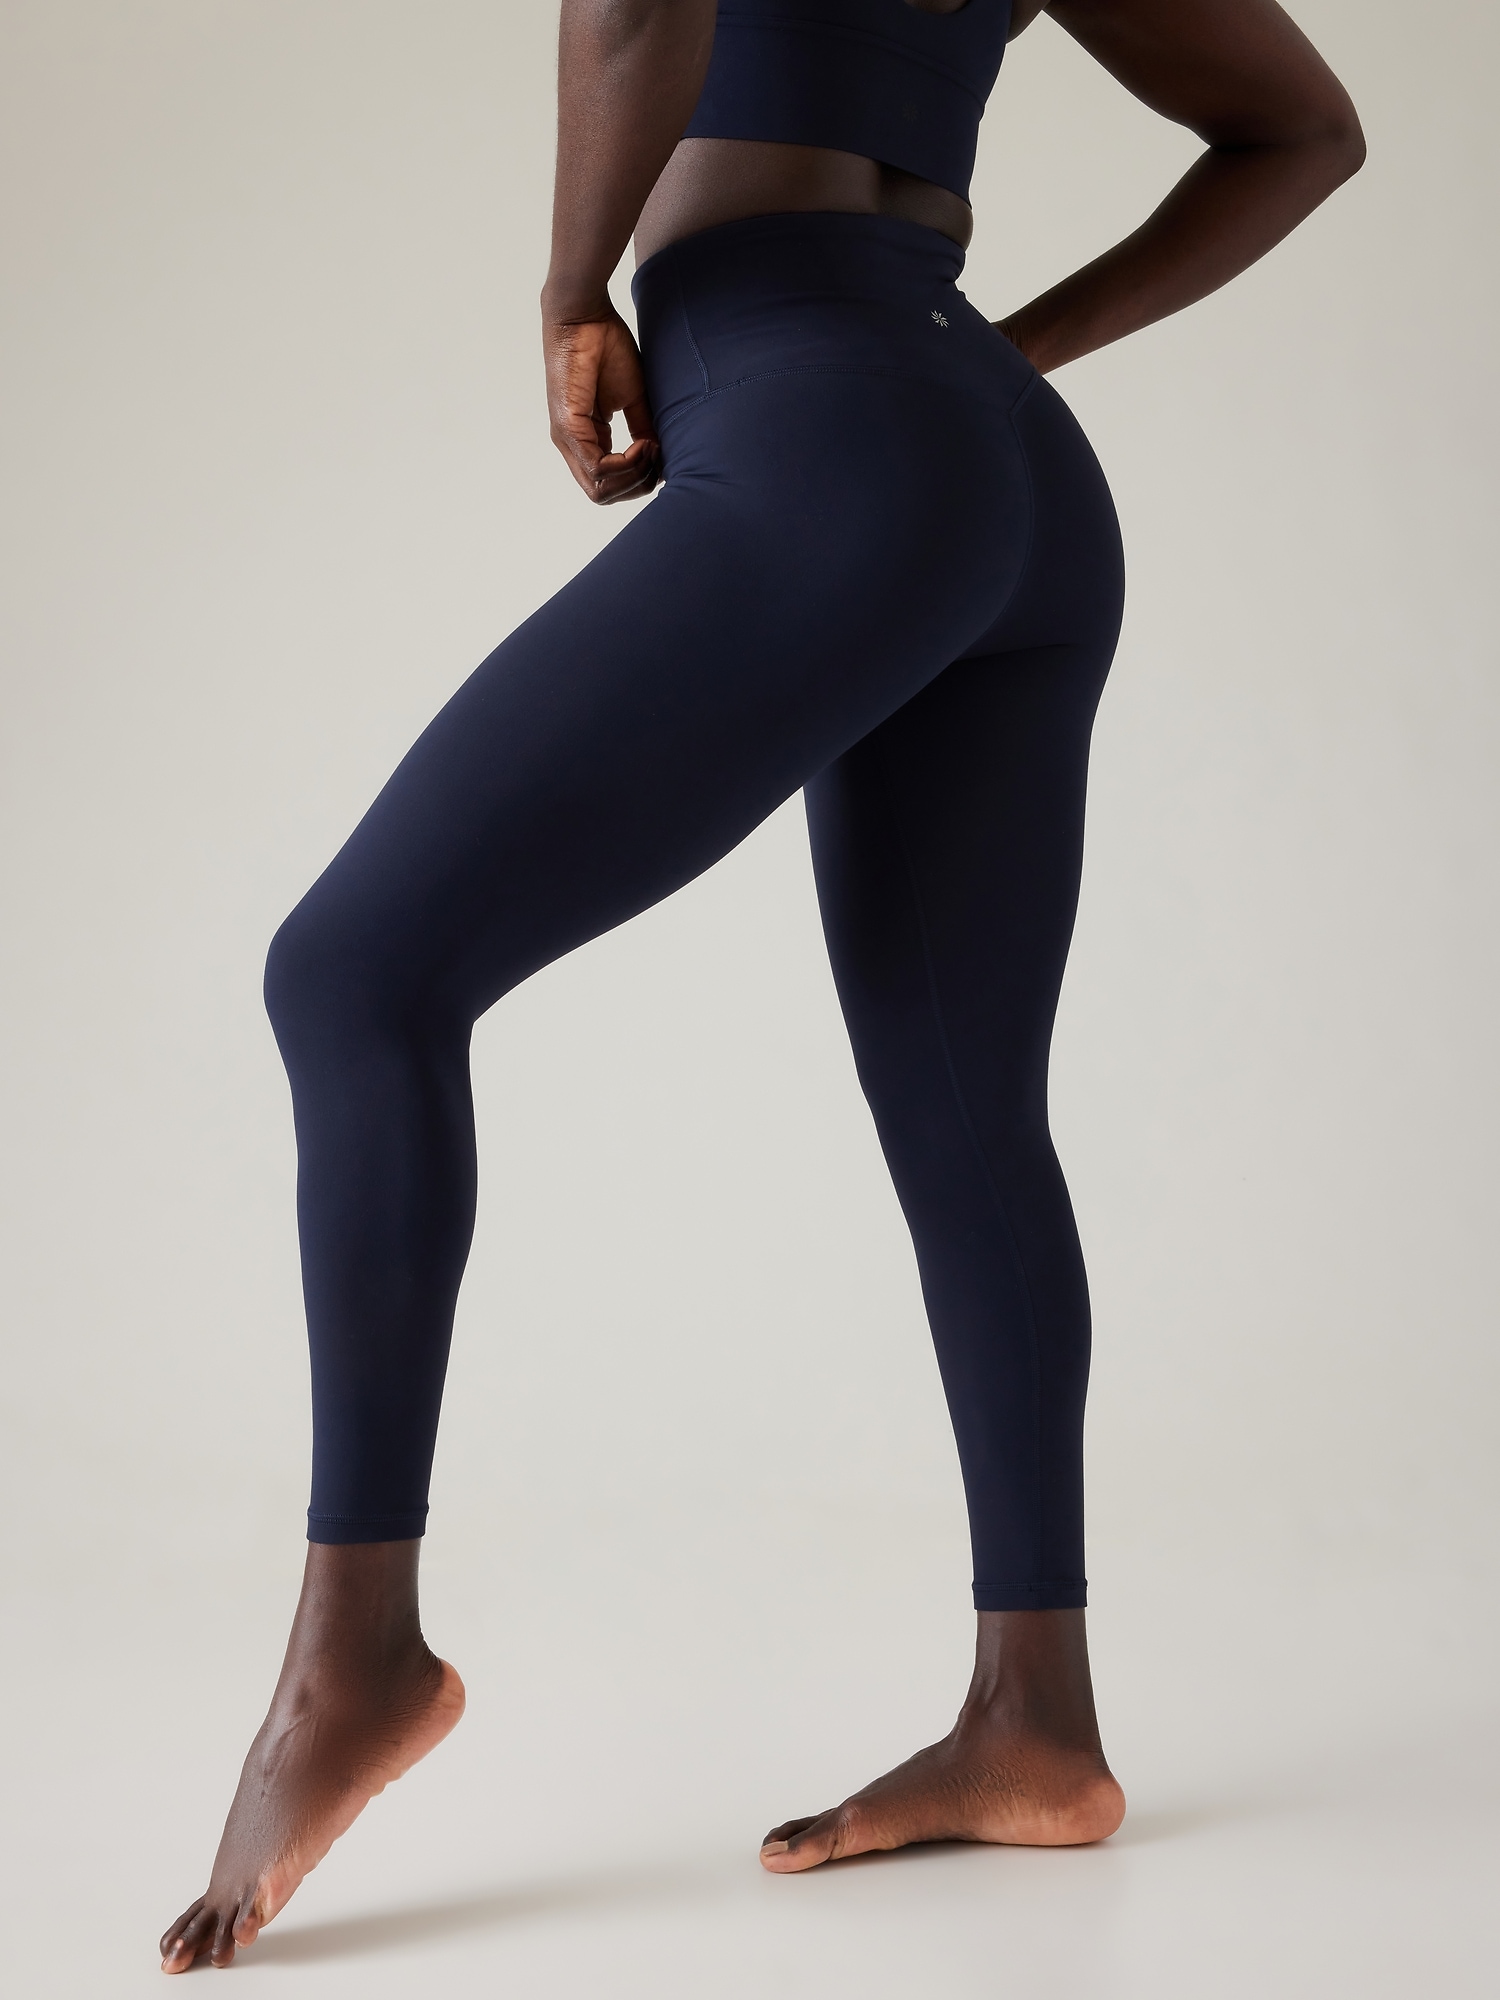 Athleta Leggings (Women's Medium) - clothing & accessories - by